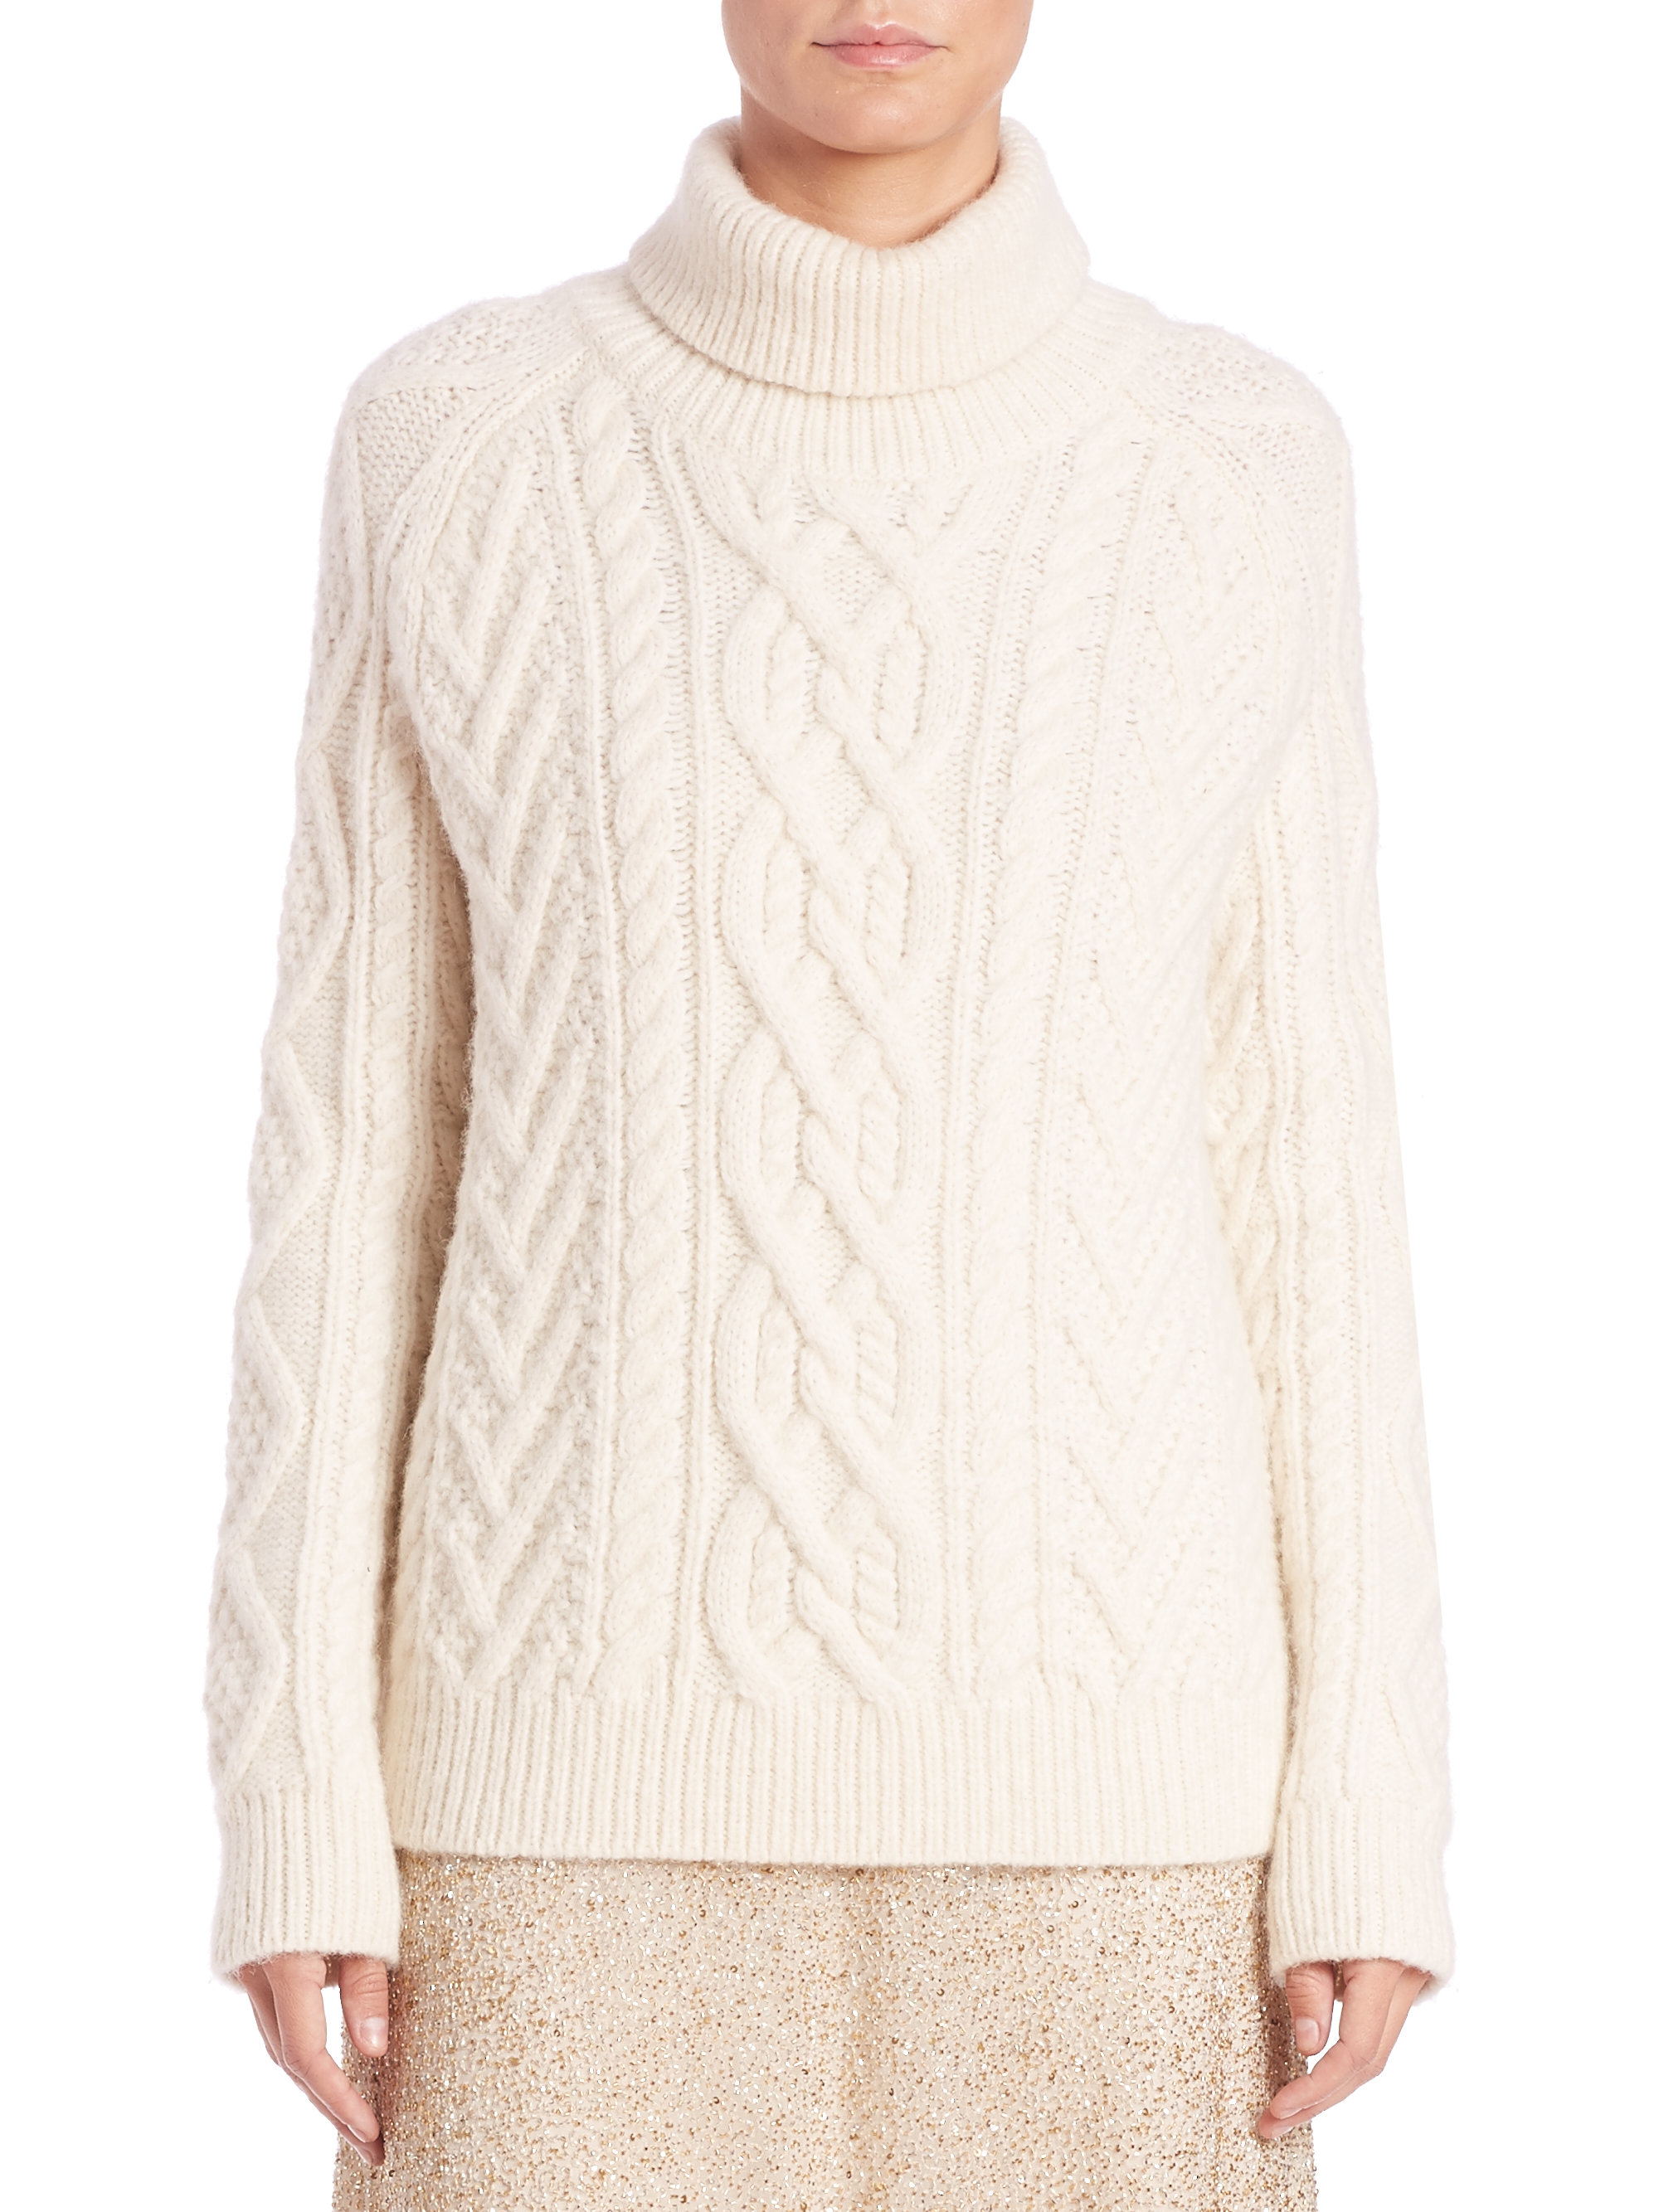 Polo ralph lauren Aran-knit Sweater in Natural | Lyst